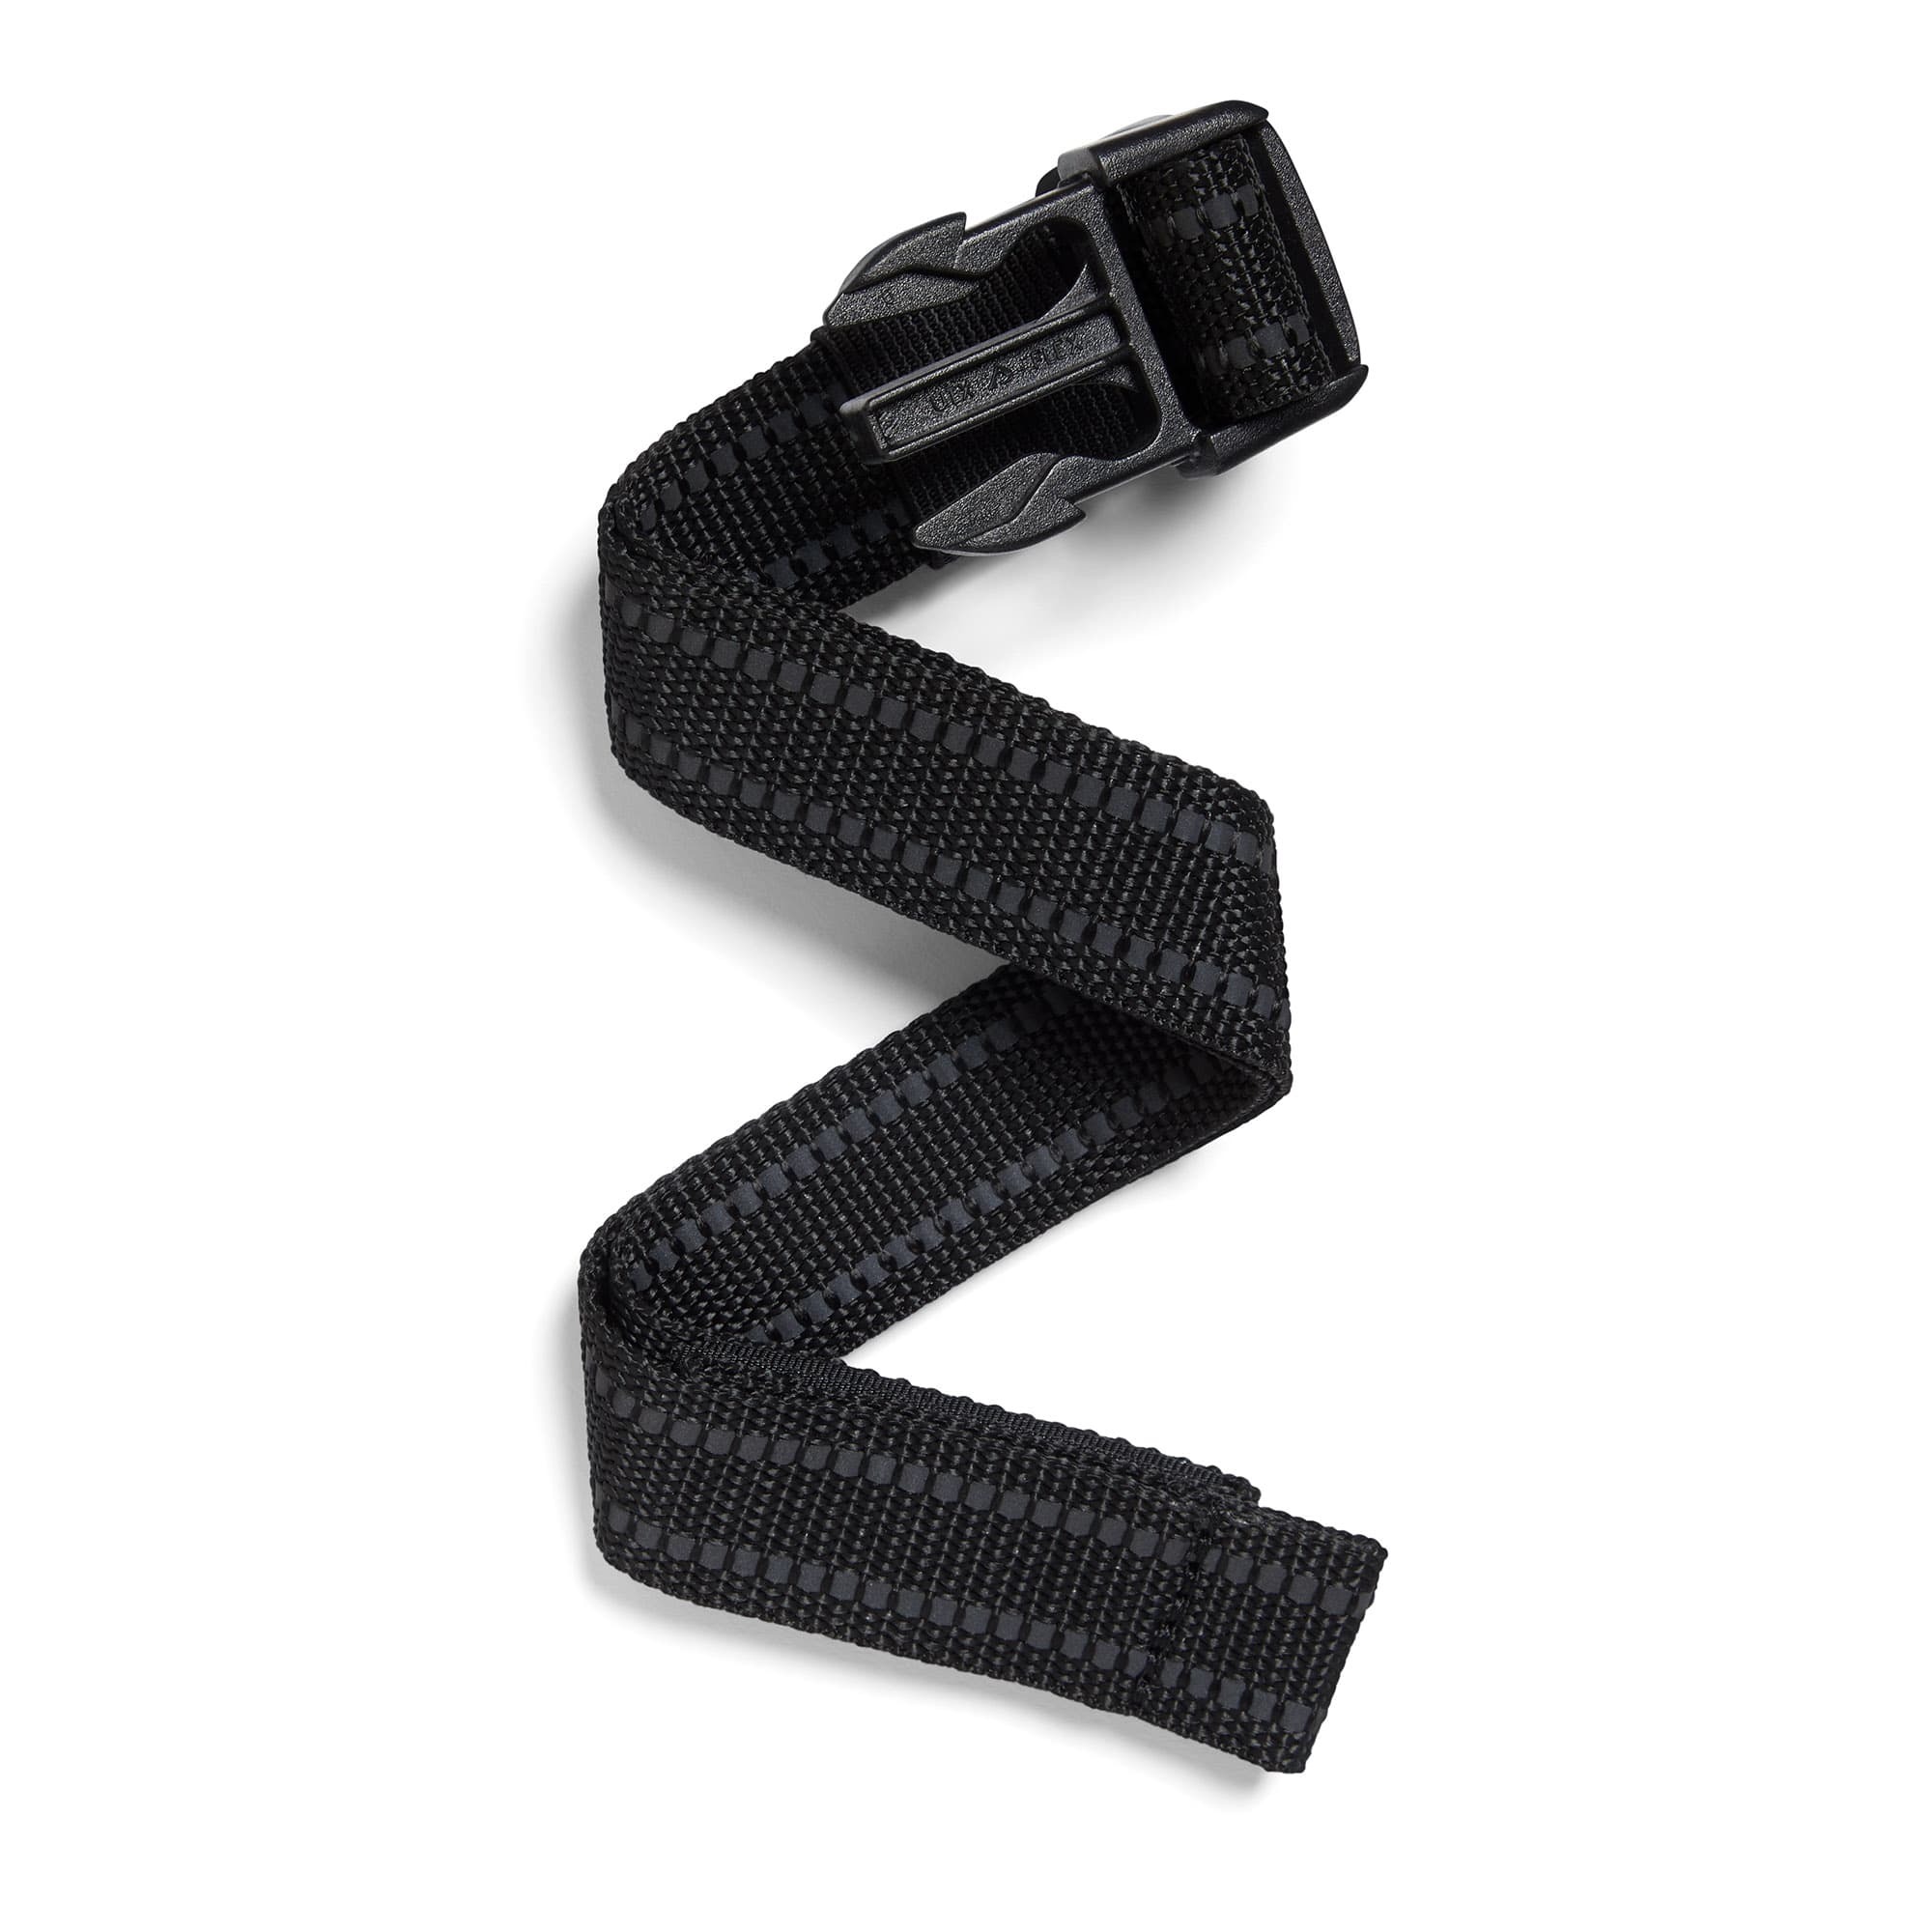 Stabilizer strap spare part in black